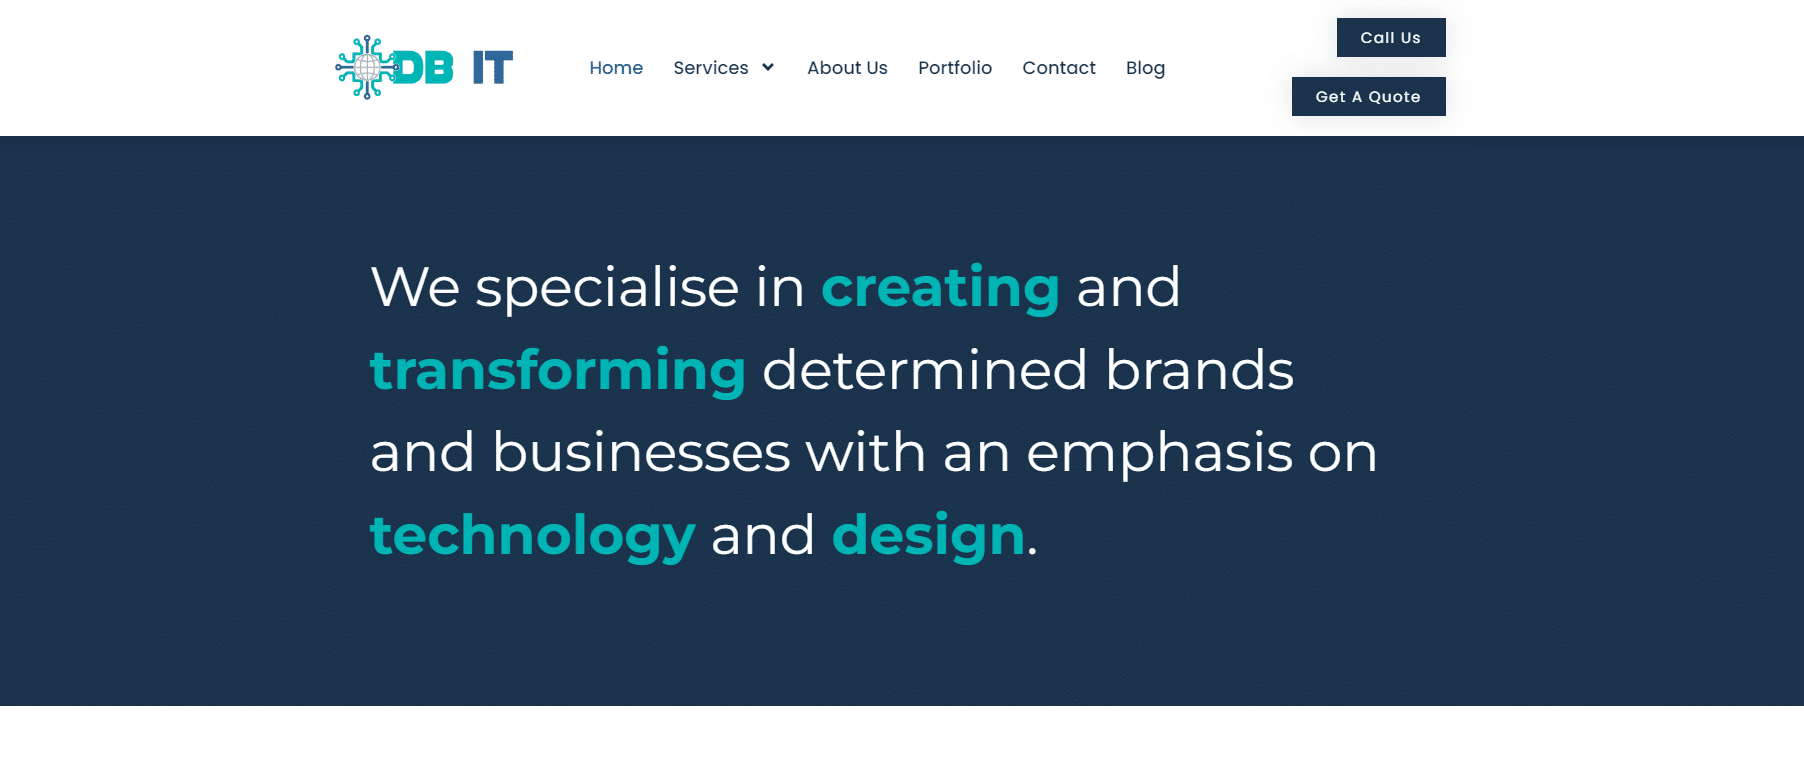 Best_Web_Design_Company_in_NewZealand